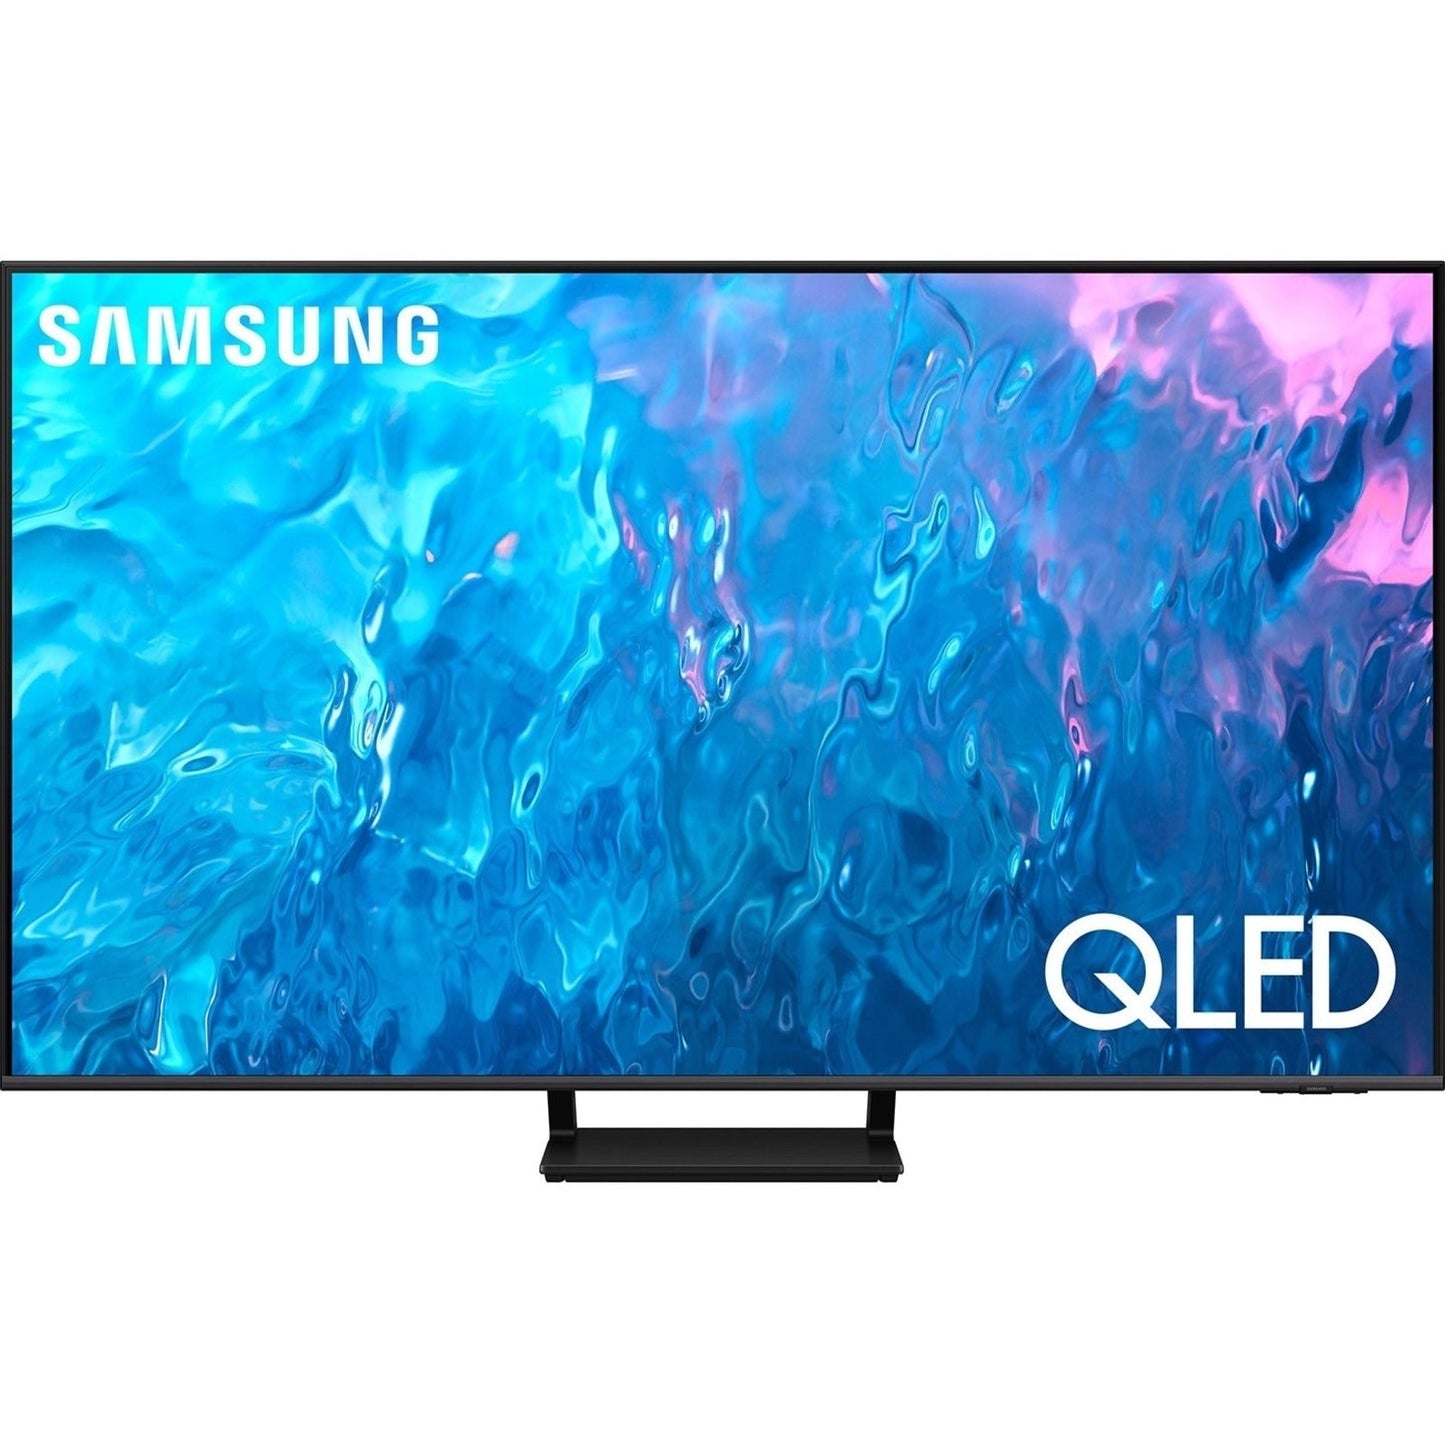 Samsung Q70C QN75Q70CAF 74.5" Smart LED-LCD TV - 4K UHDTV - Black